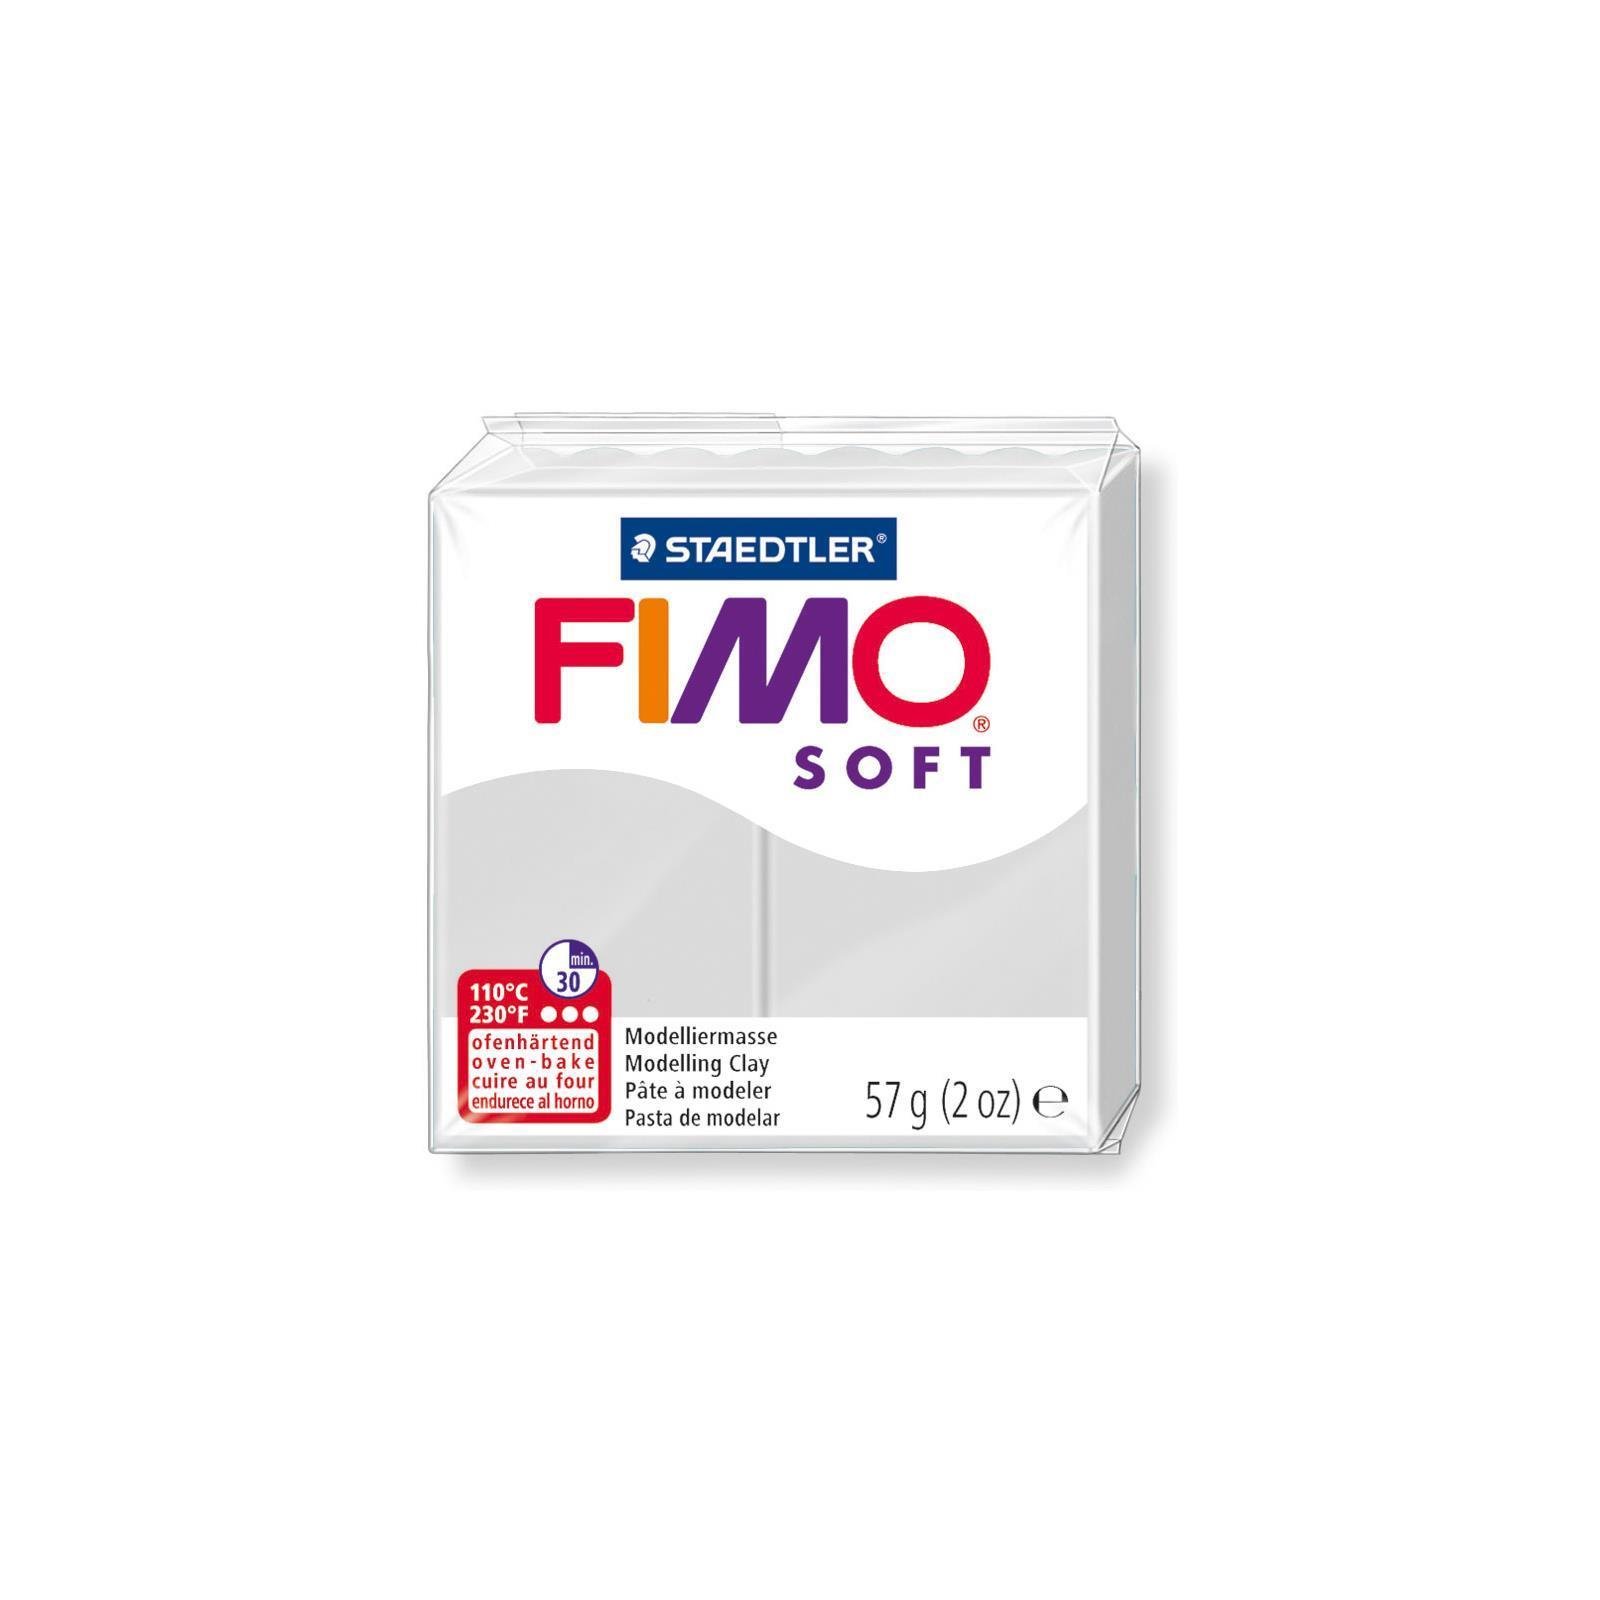 FIMO SOFT Modelliermasse delfingrau 57 g ofenhärtend 